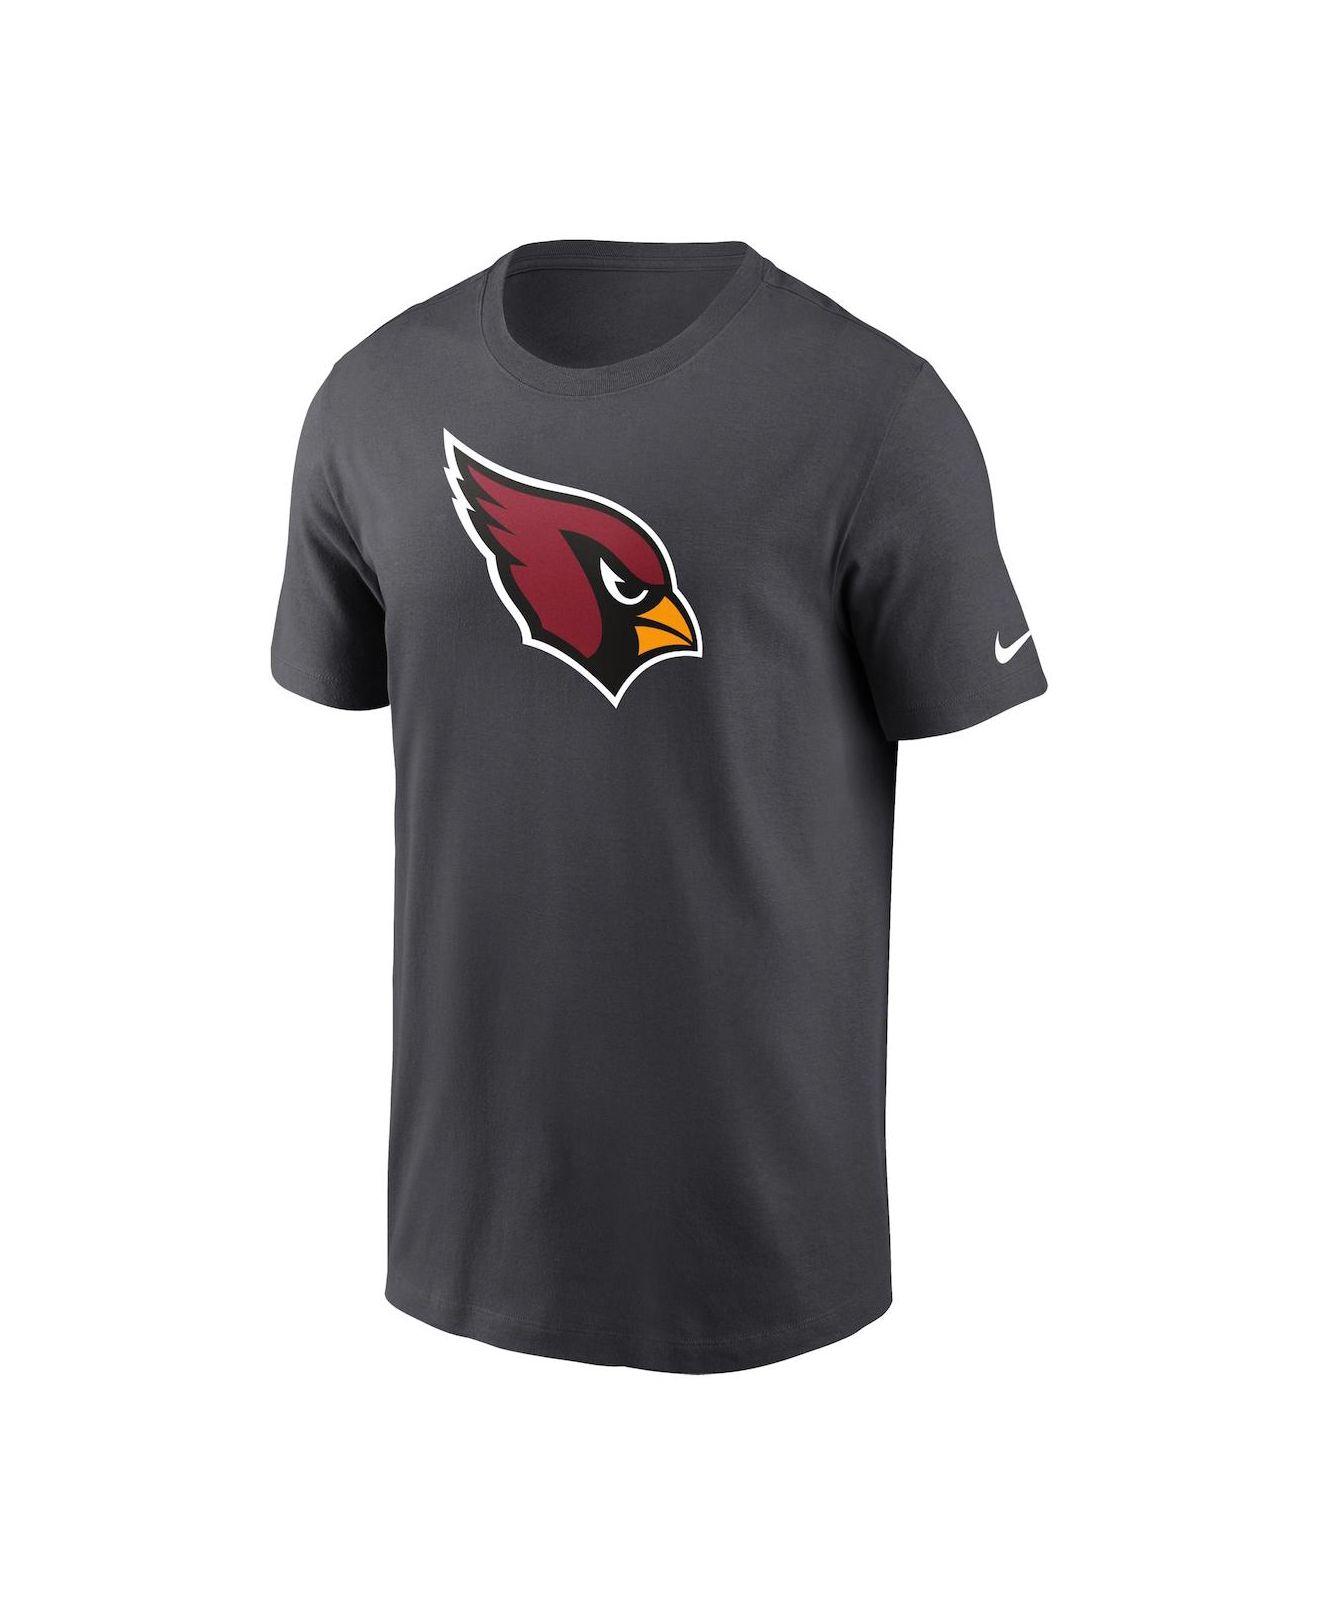 Nike Dri-FIT Velocity Athletic Stack (NFL Arizona Cardinals) Men's T-Shirt